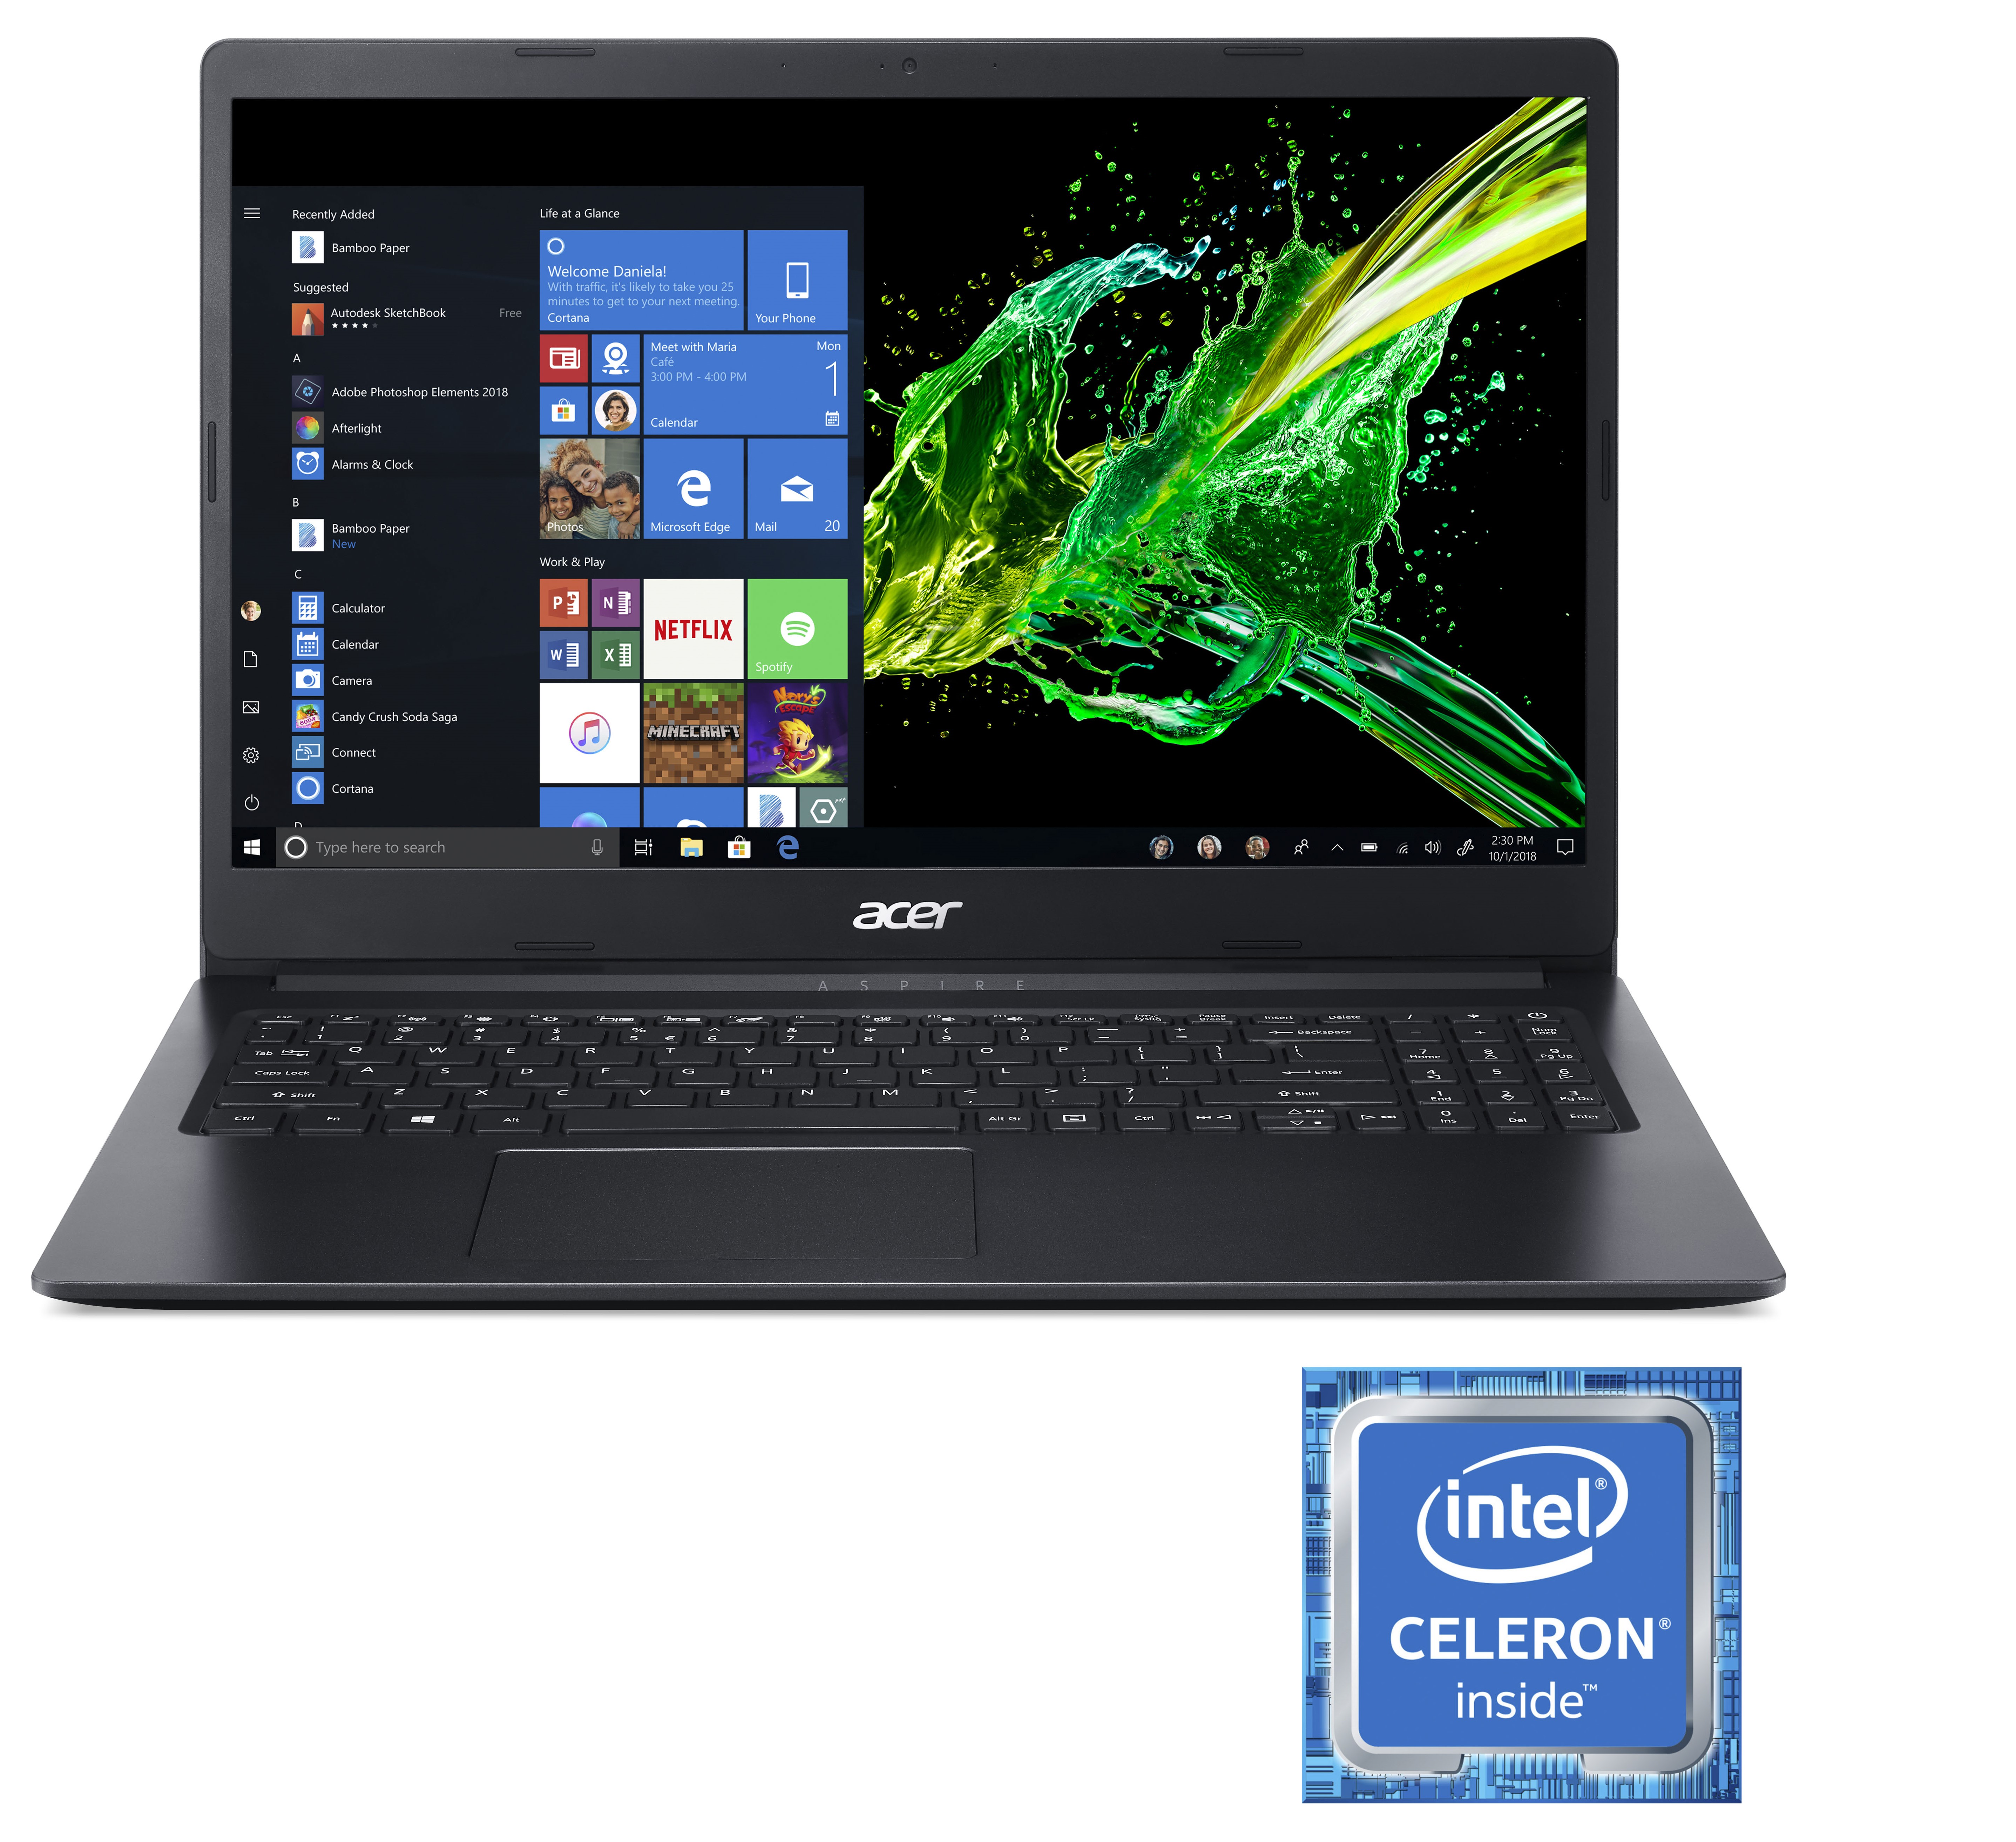 Acer Aspire 1, 15.6" HD, Intel Celeron N4000, 4GB DDR4 RAM, 64GB eMMC, Windows 10 in S mode, A115-31-C23T - image 2 of 3